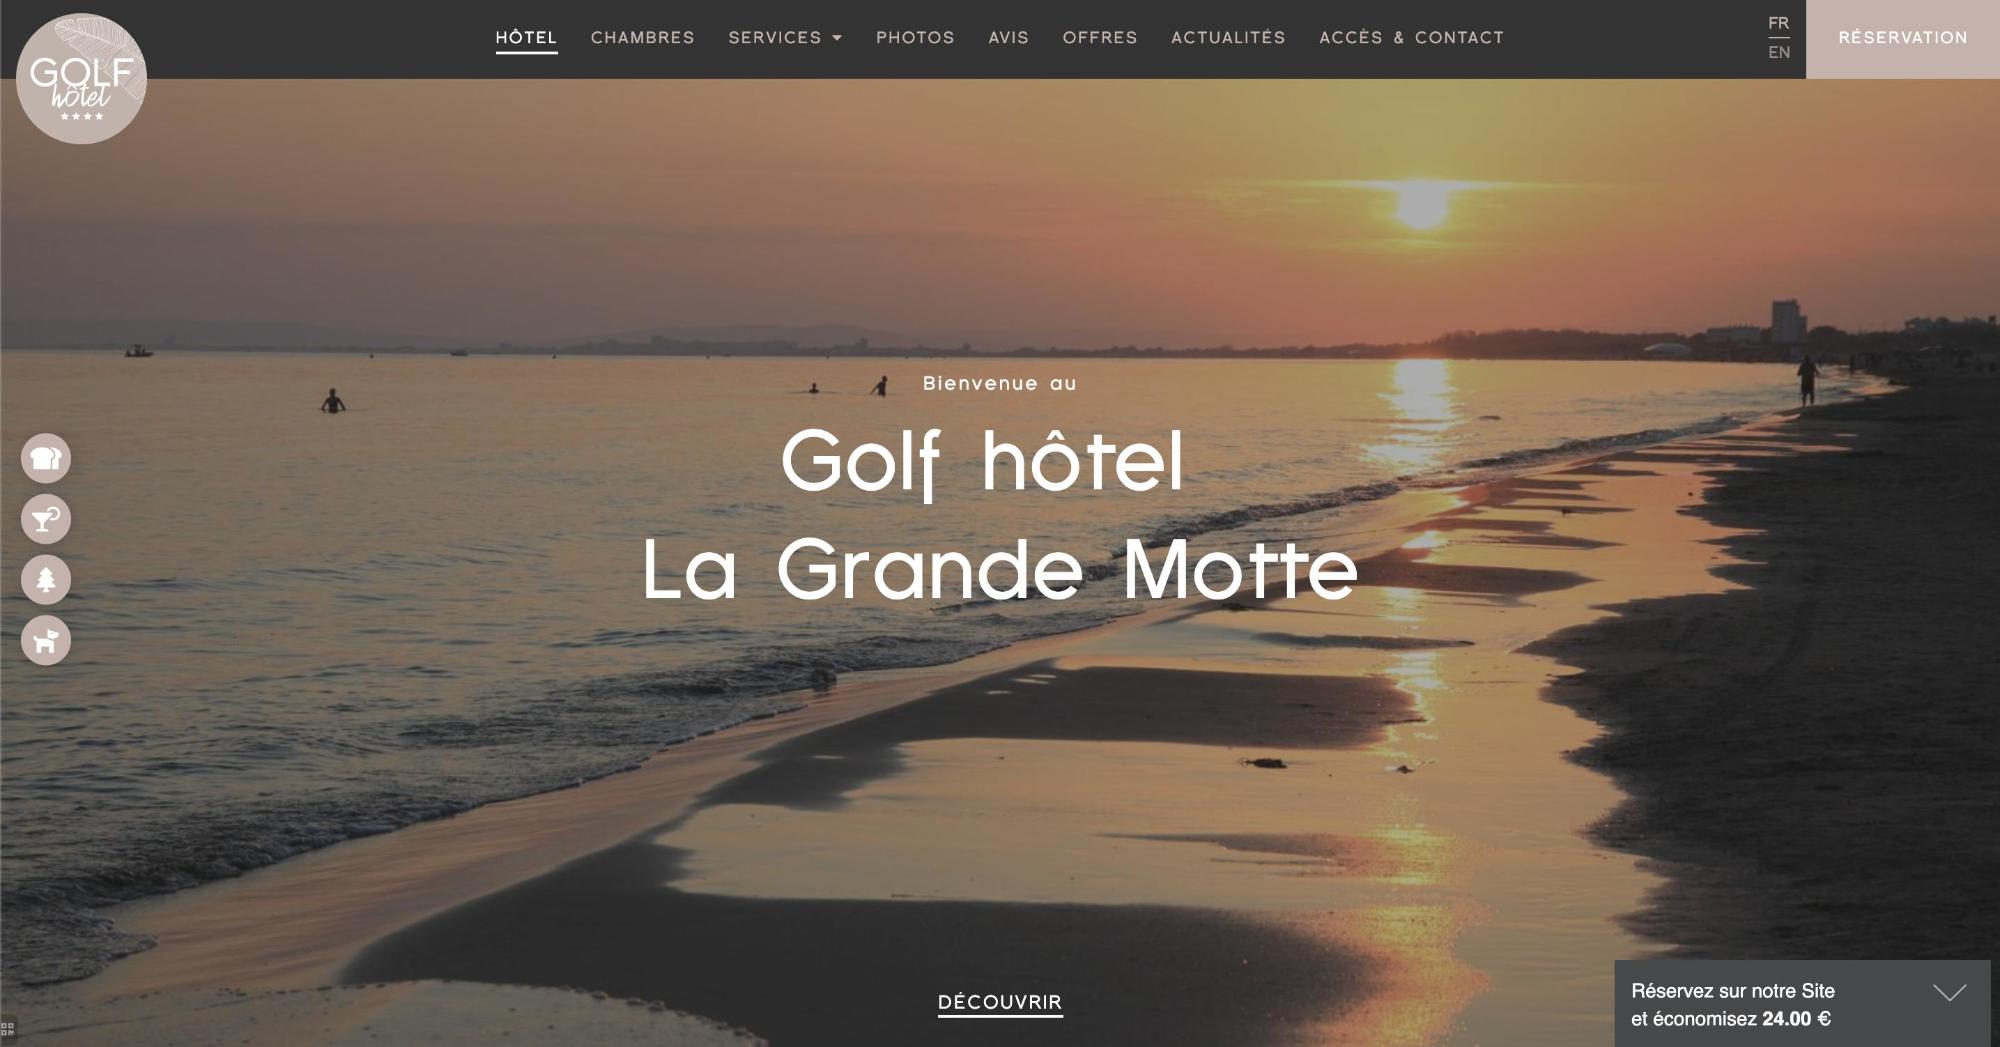 Agence MMCréation | Portfolio Golf Hôtel